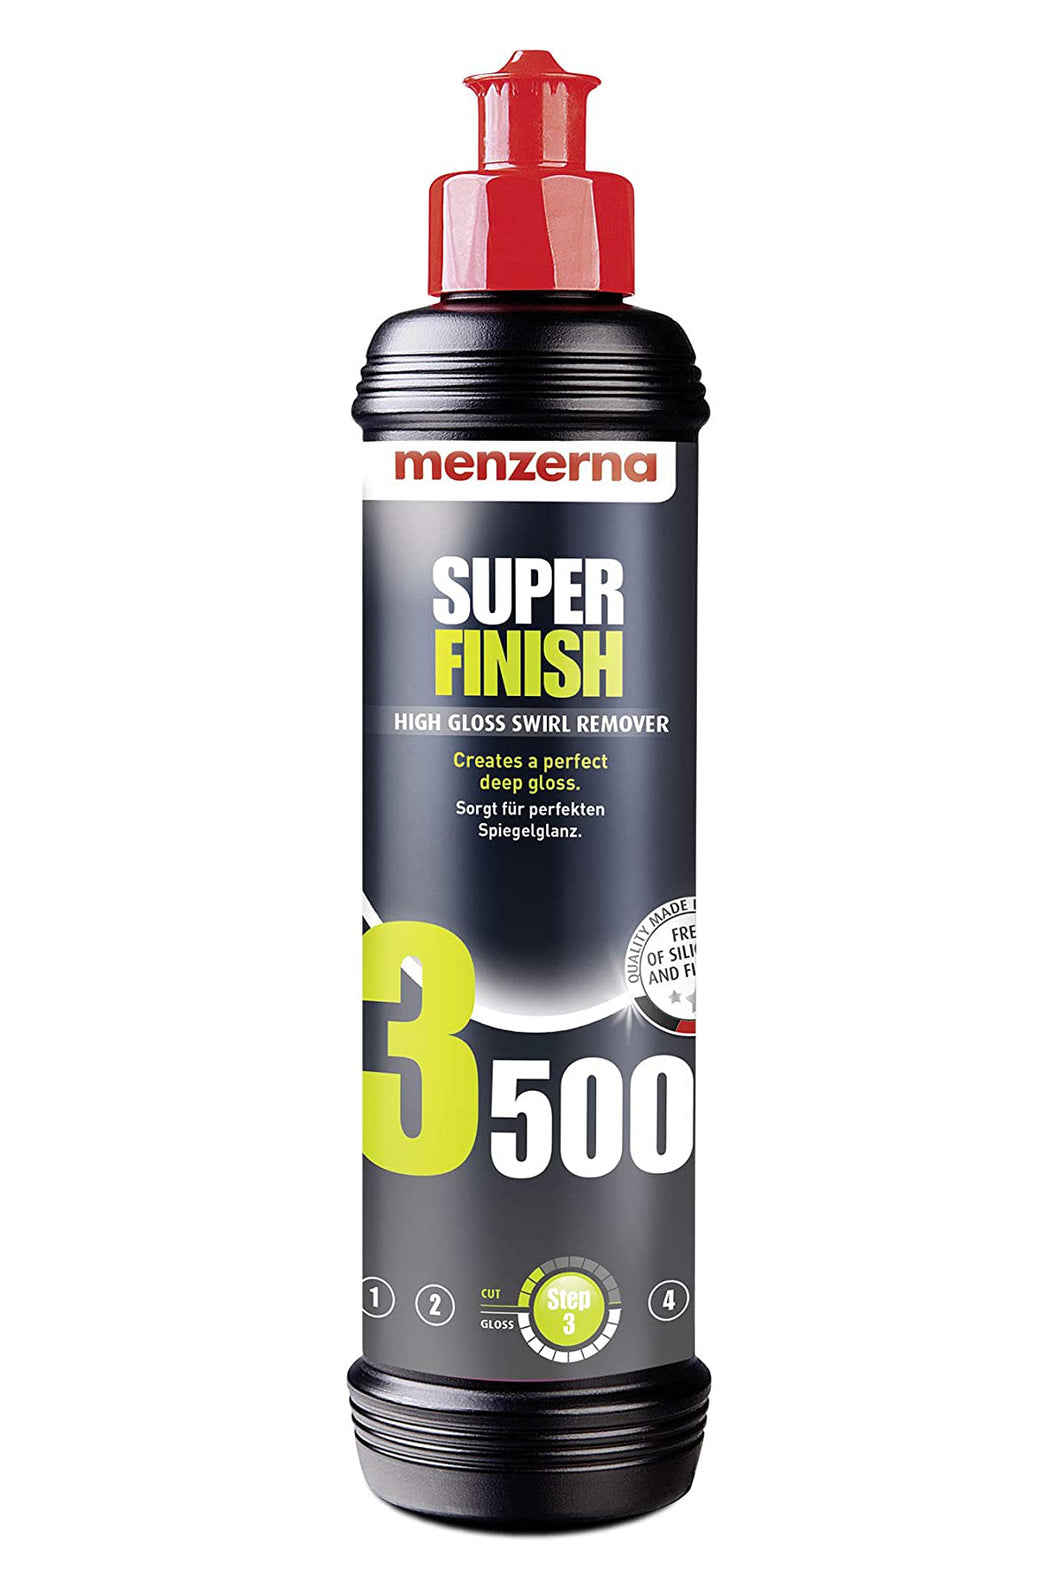 Menzerna Super Finish 3500 (2 Sizes)